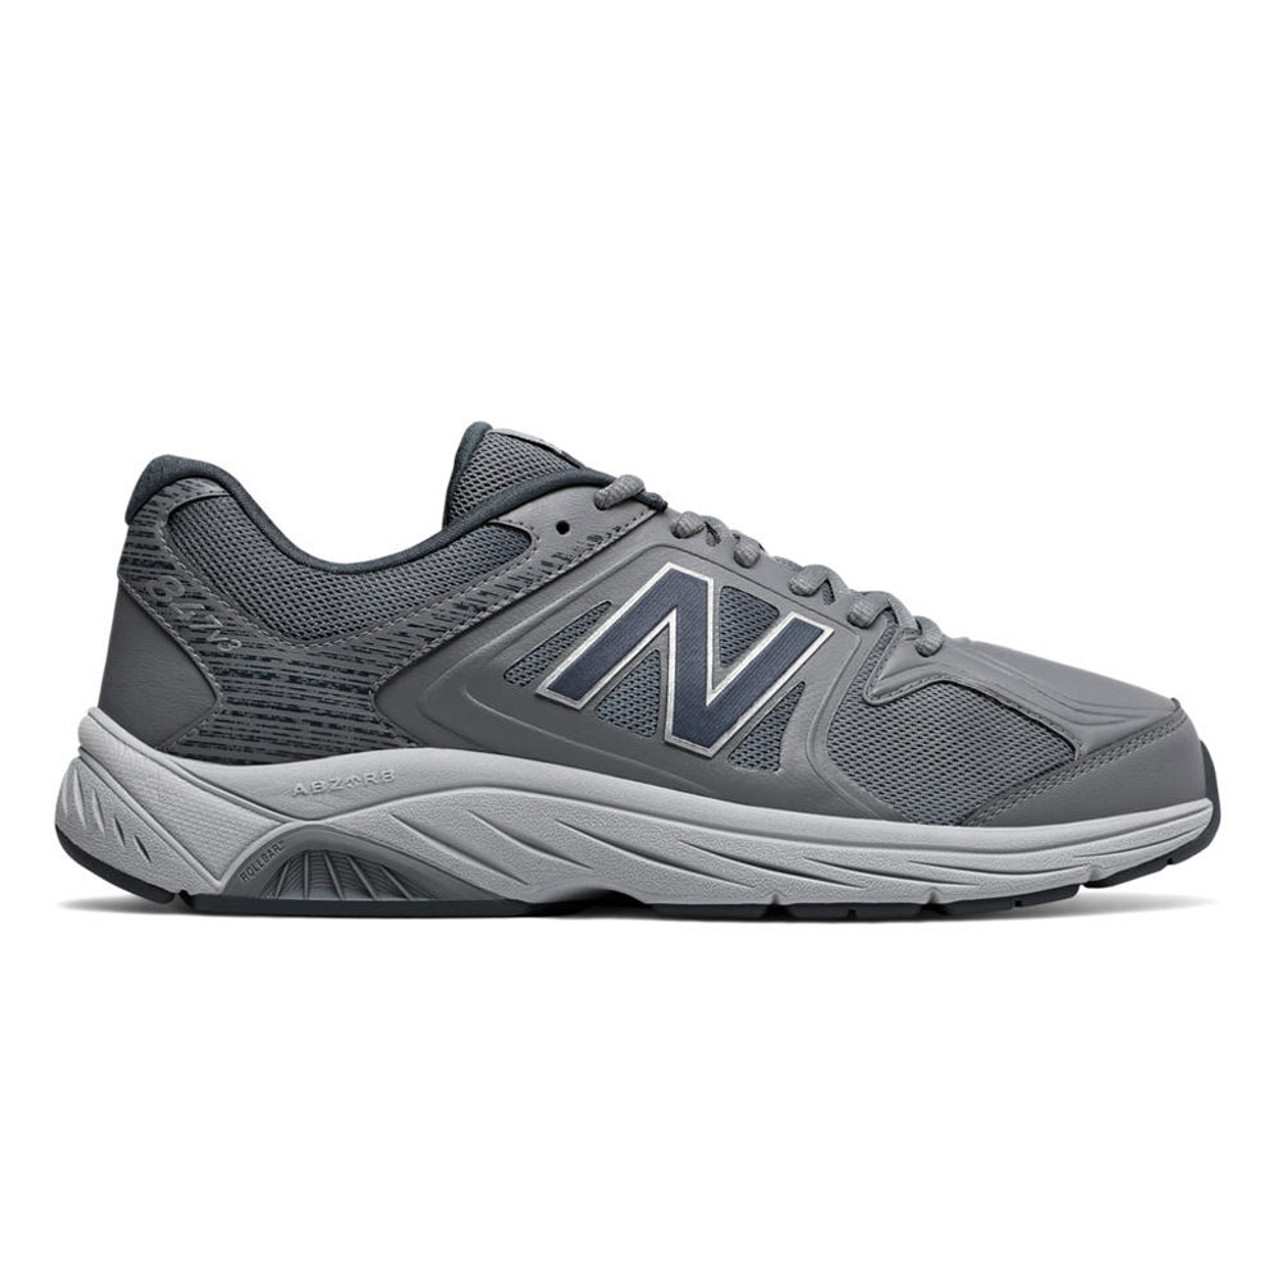 NB 847v3 Walking - Grey - ShoeStores.com